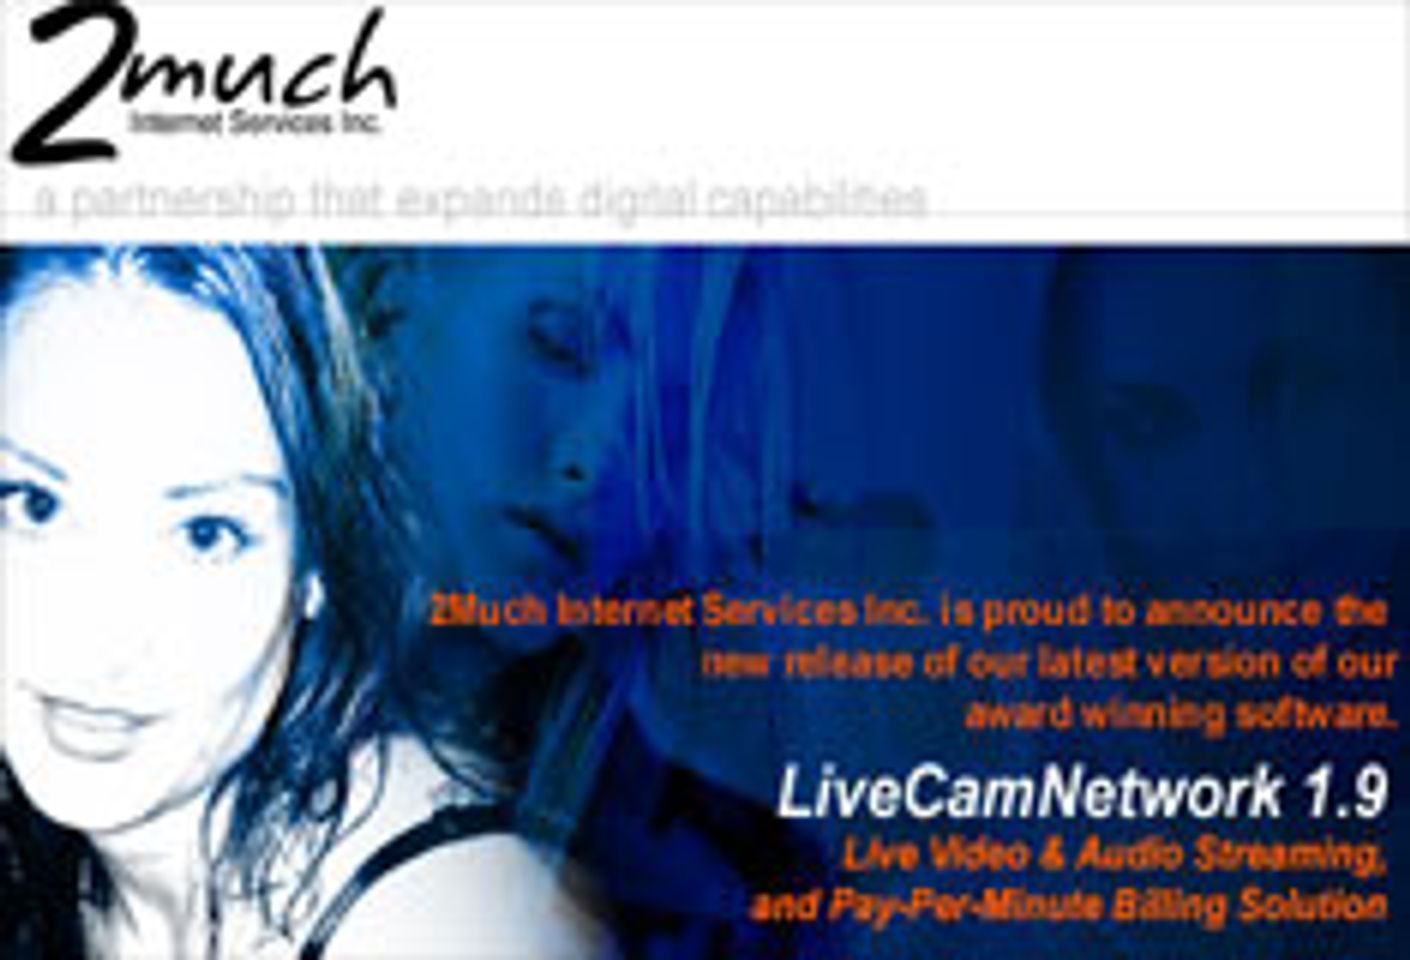 2Much.net Offering Free Press Release Service